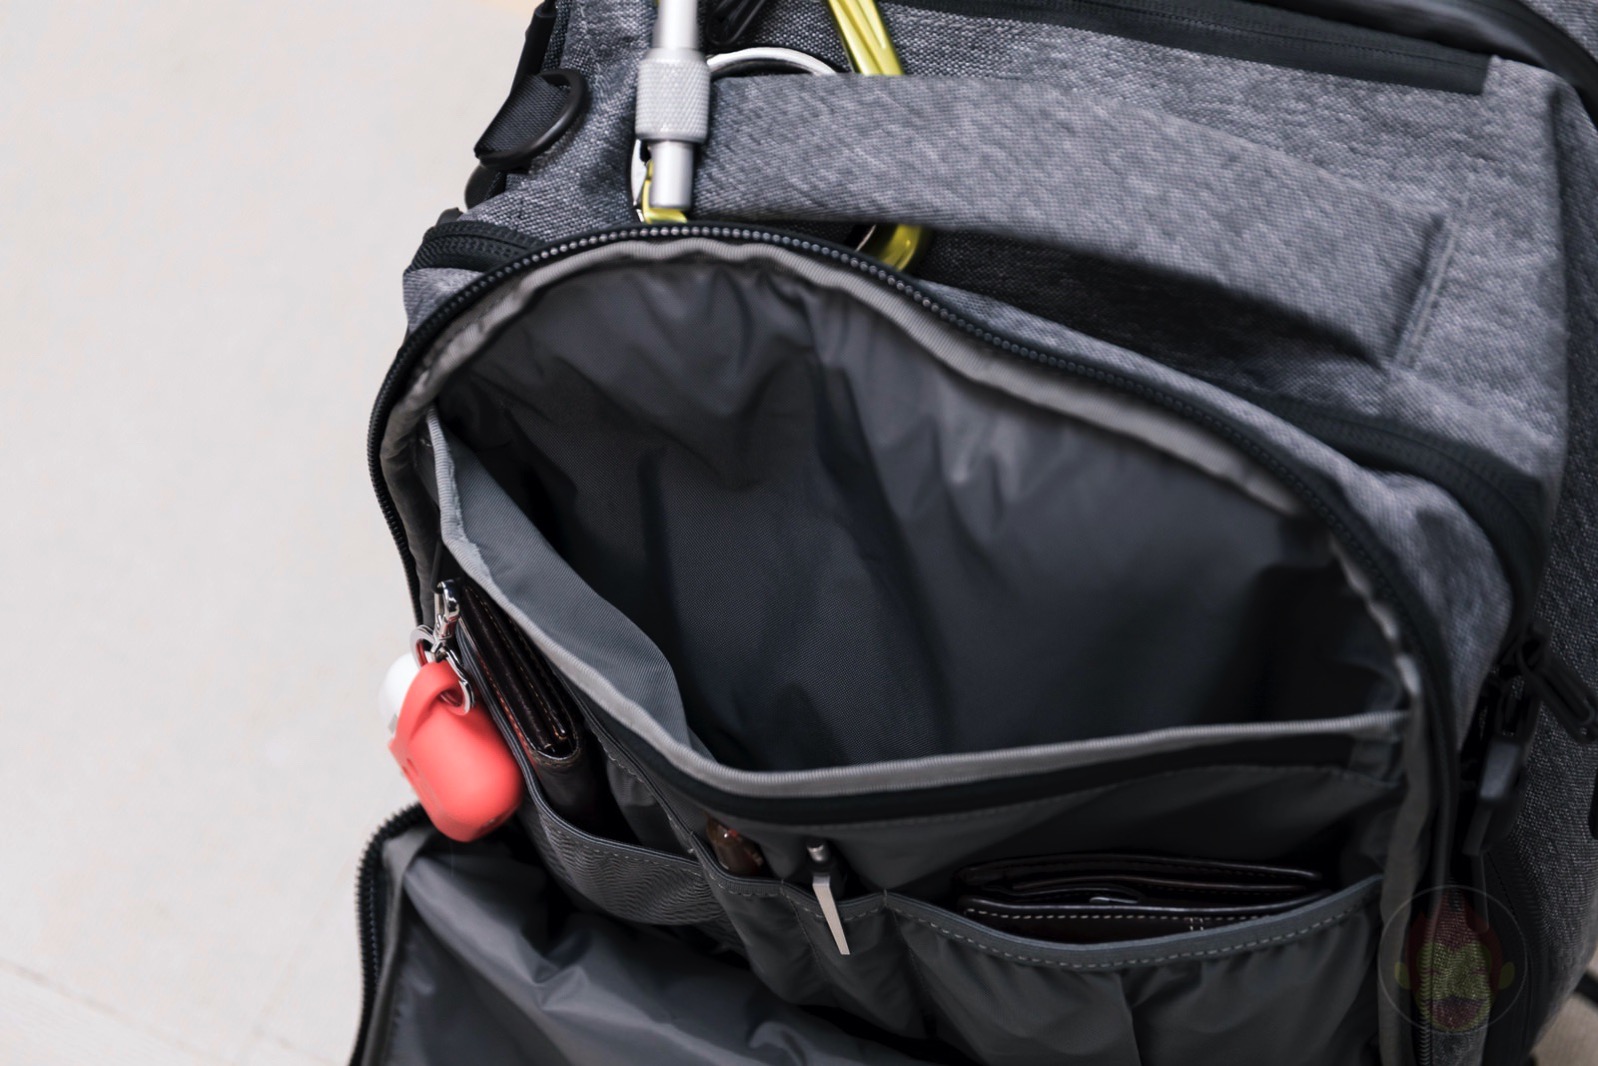 Aer-Travel-Pack-2-Backpack-Review-22.jpg